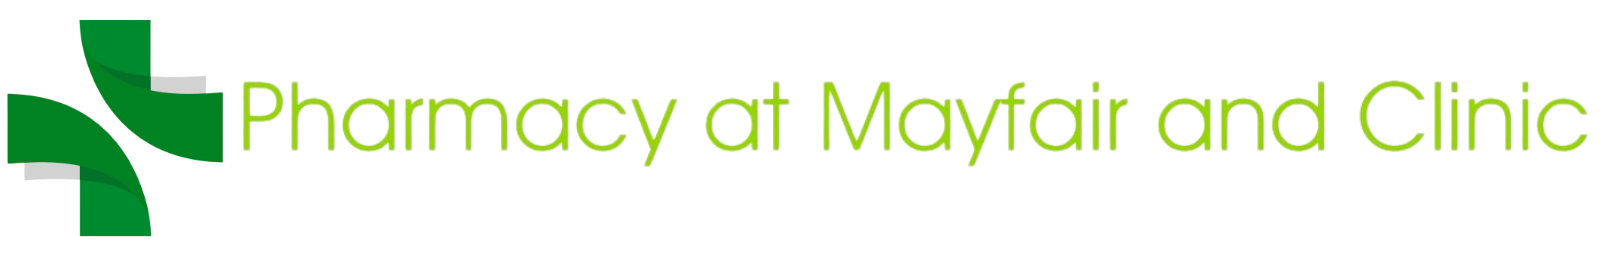 Pharmacy at Mayfair and Clinic logo